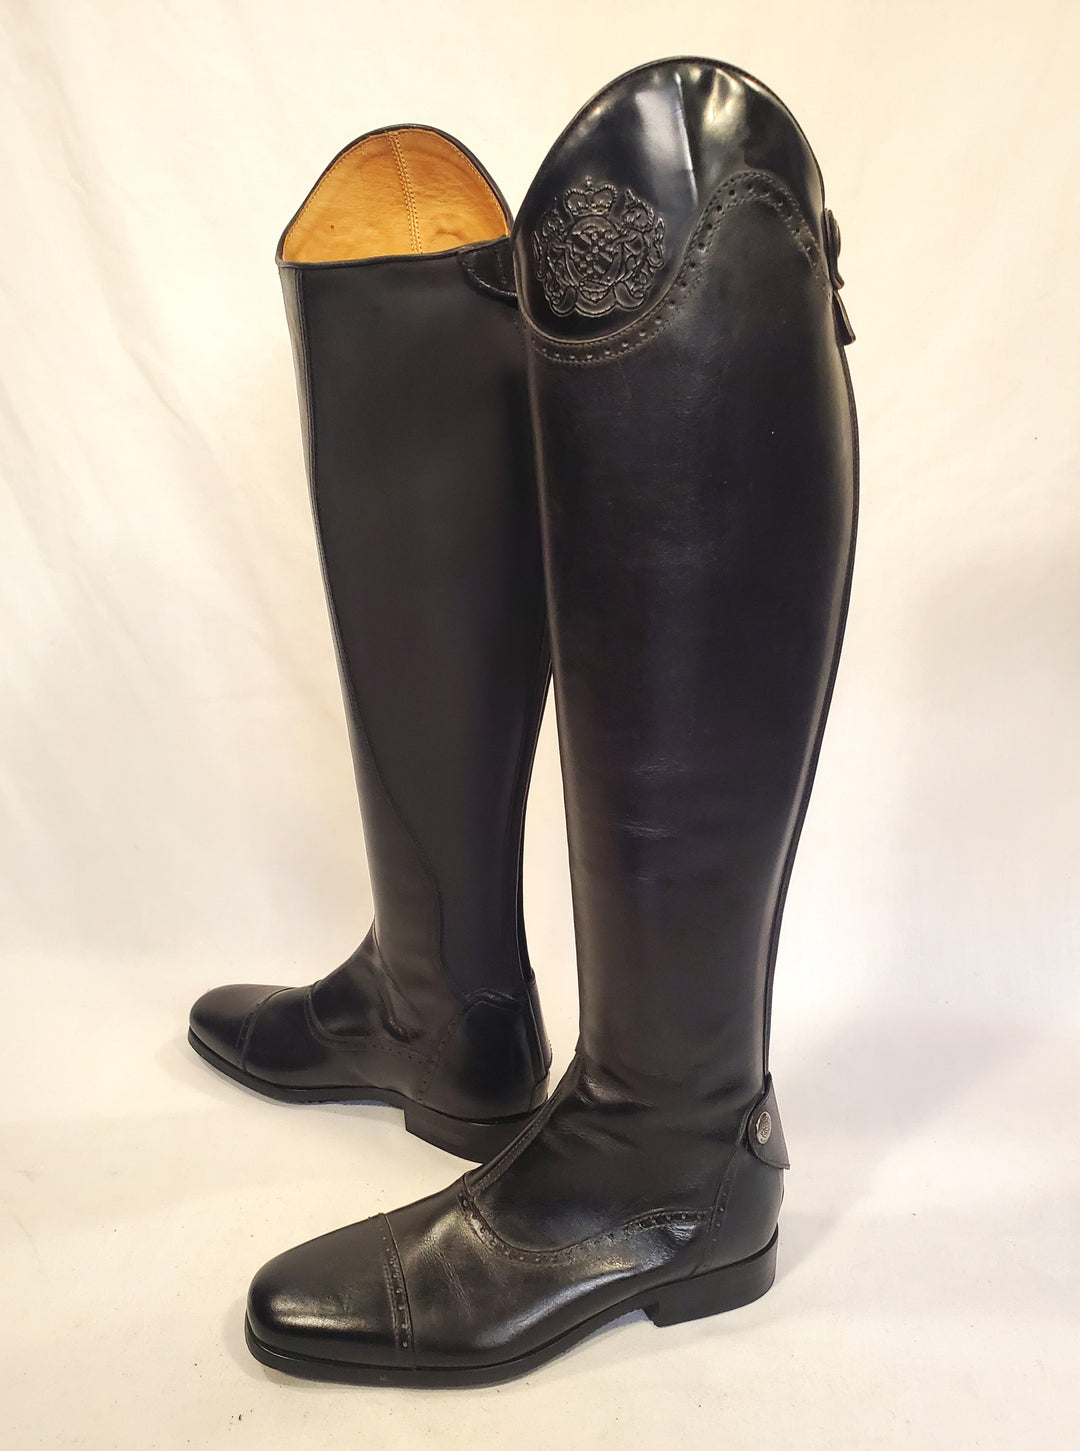 Alberto Fasciani Dress Boots - Size 38 LM (Women's 7/7.5 Large Reg) - New!